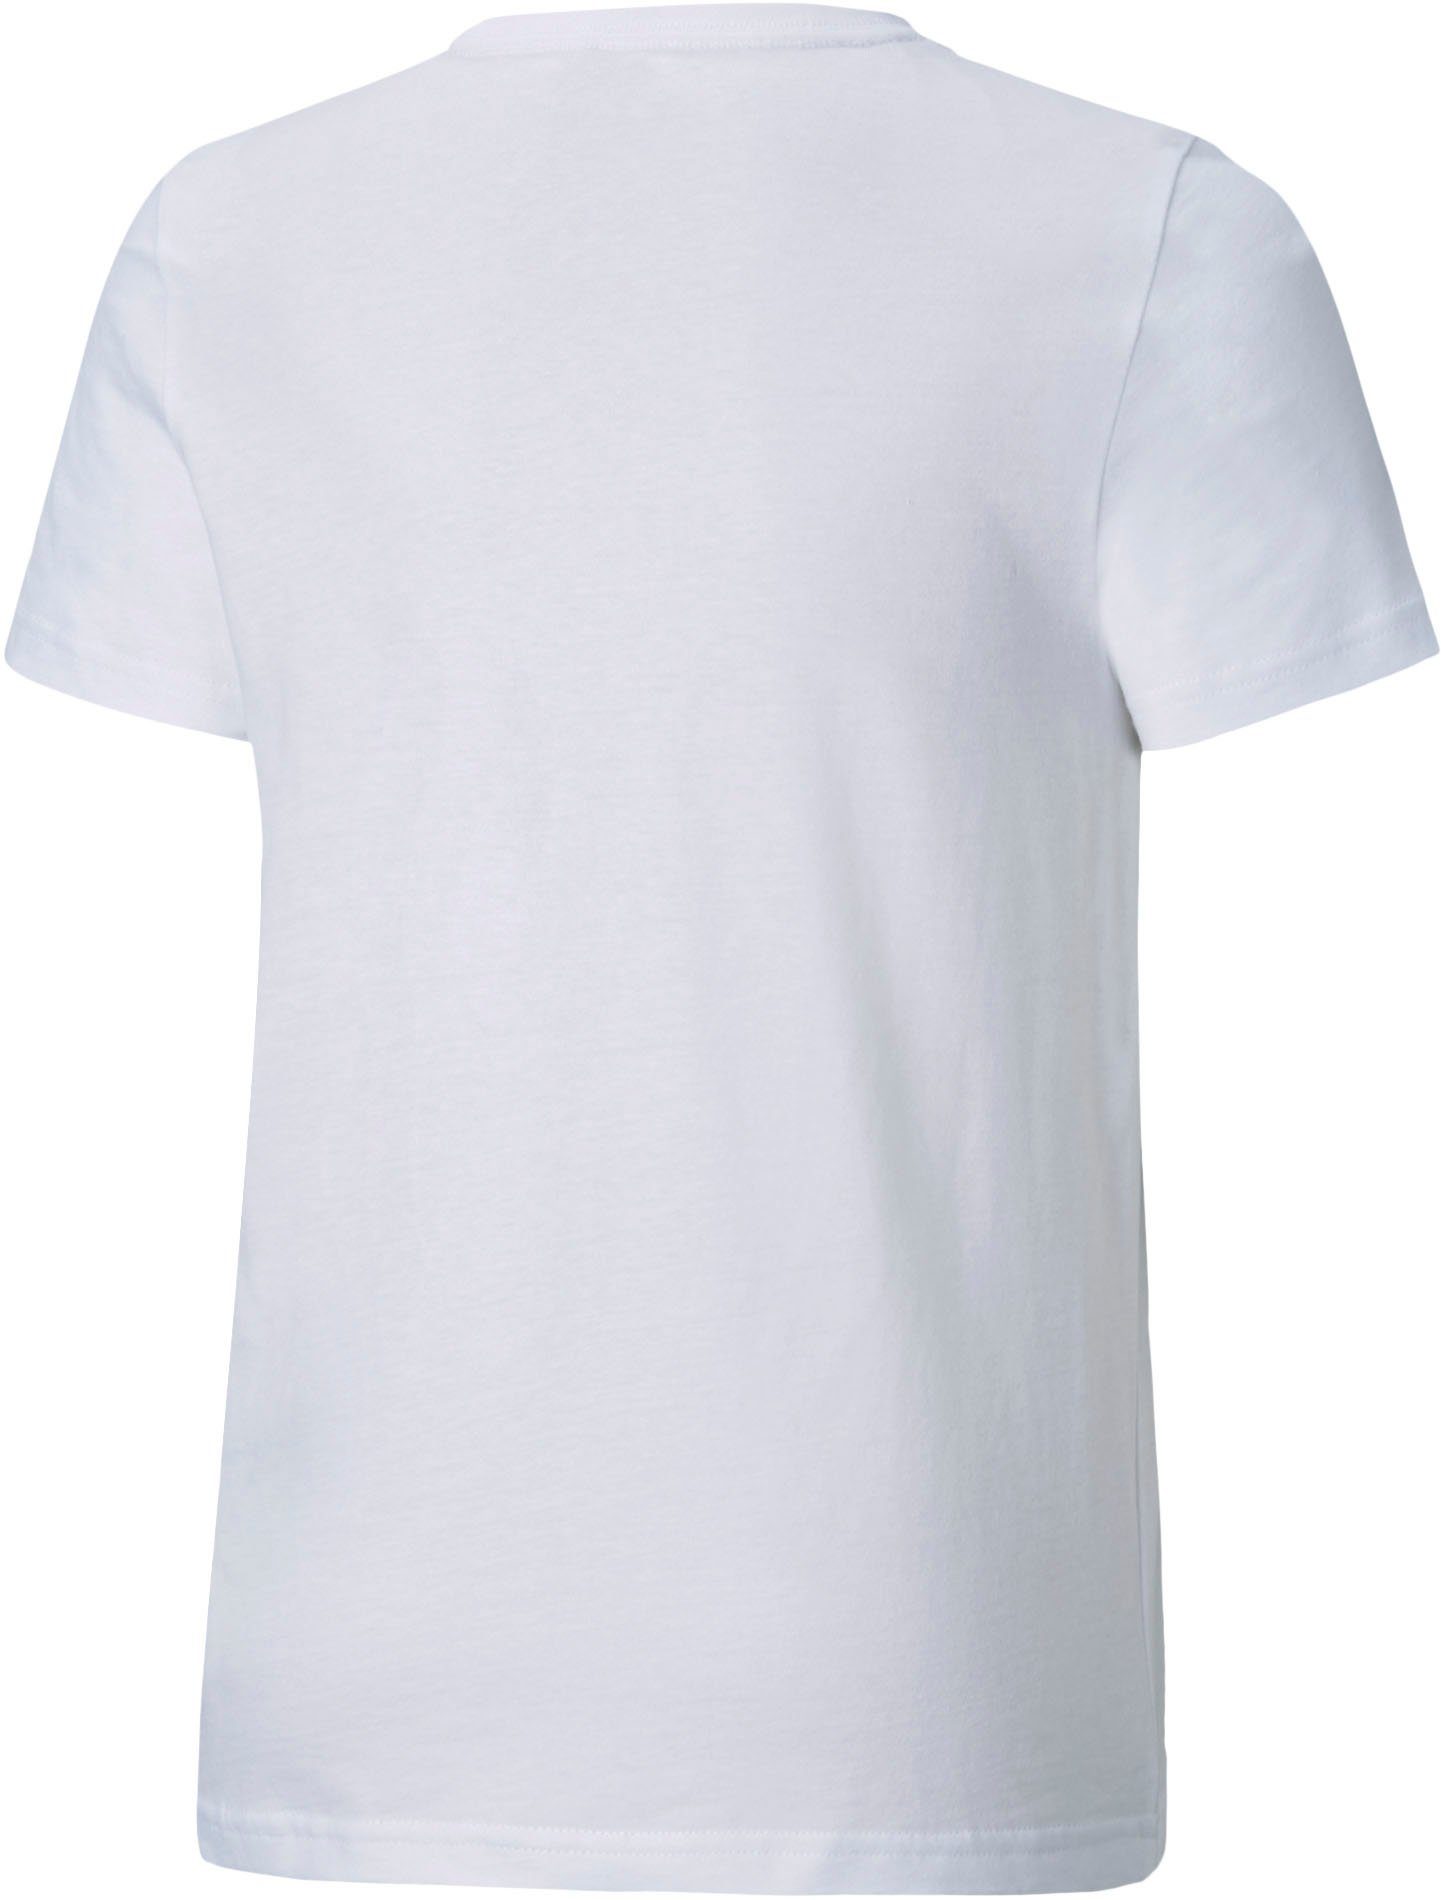 TEE PUMA T-Shirt LOGO B White ESS Puma